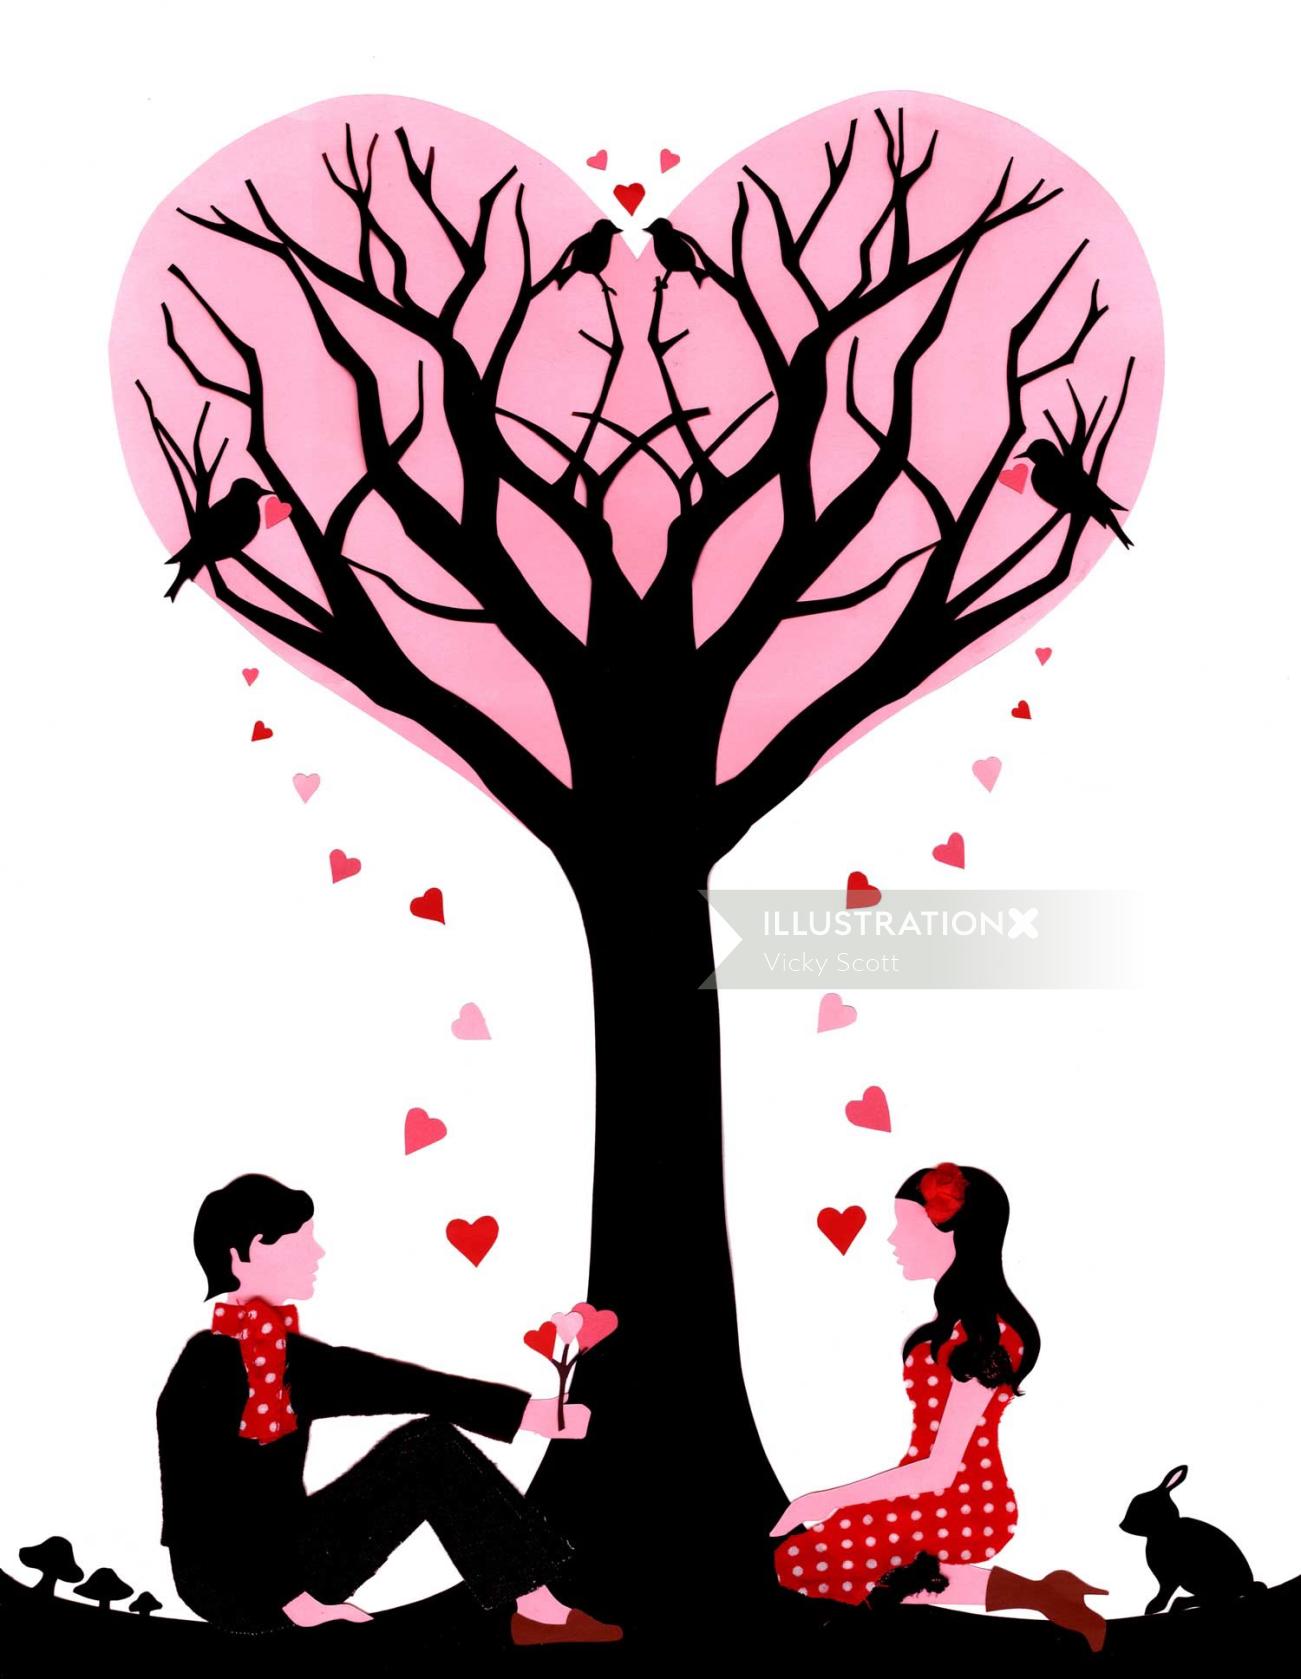 Lovers under tree illustration by Vicky Scott